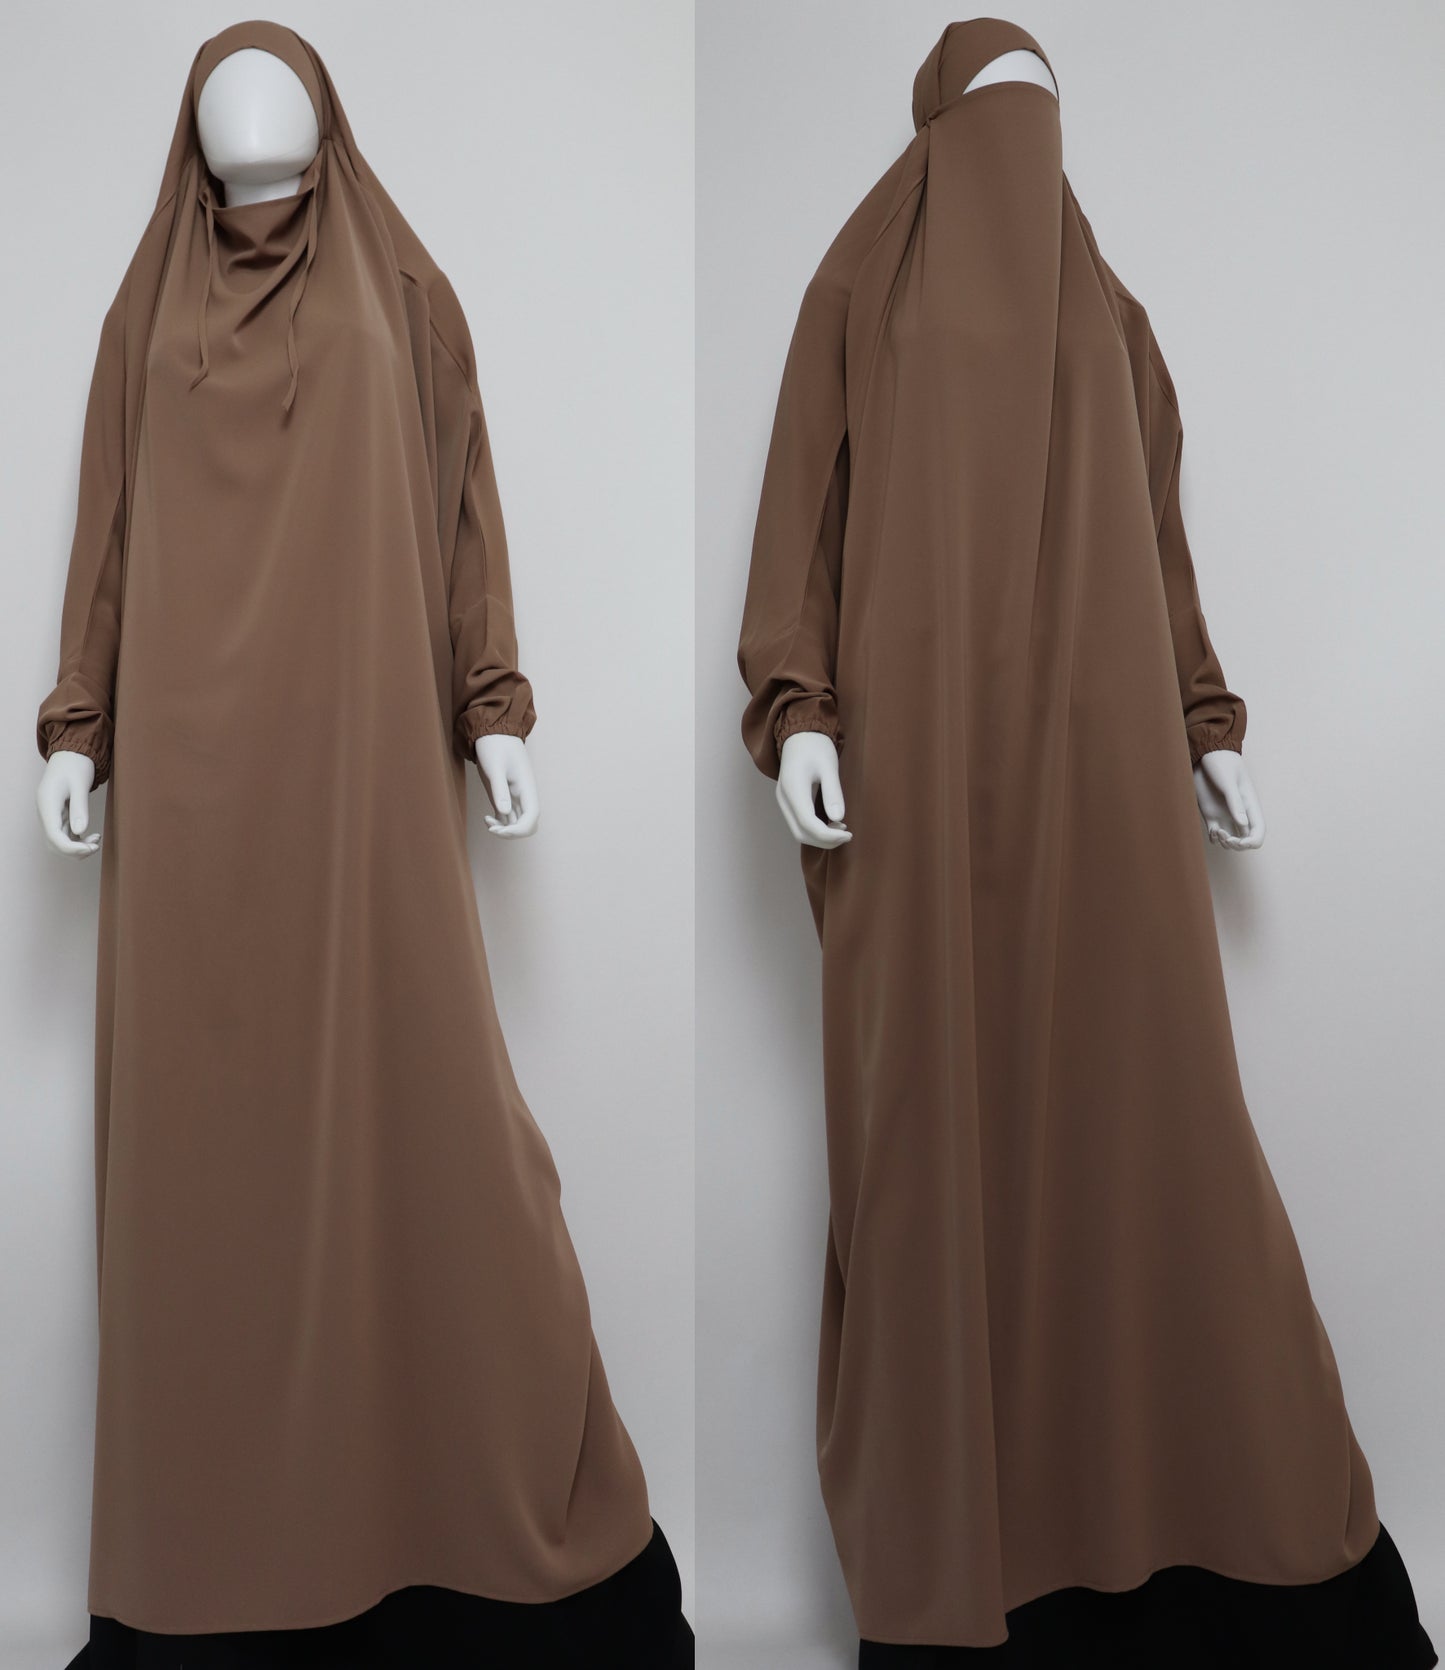 One Piece Full Length Jilbab - Camel